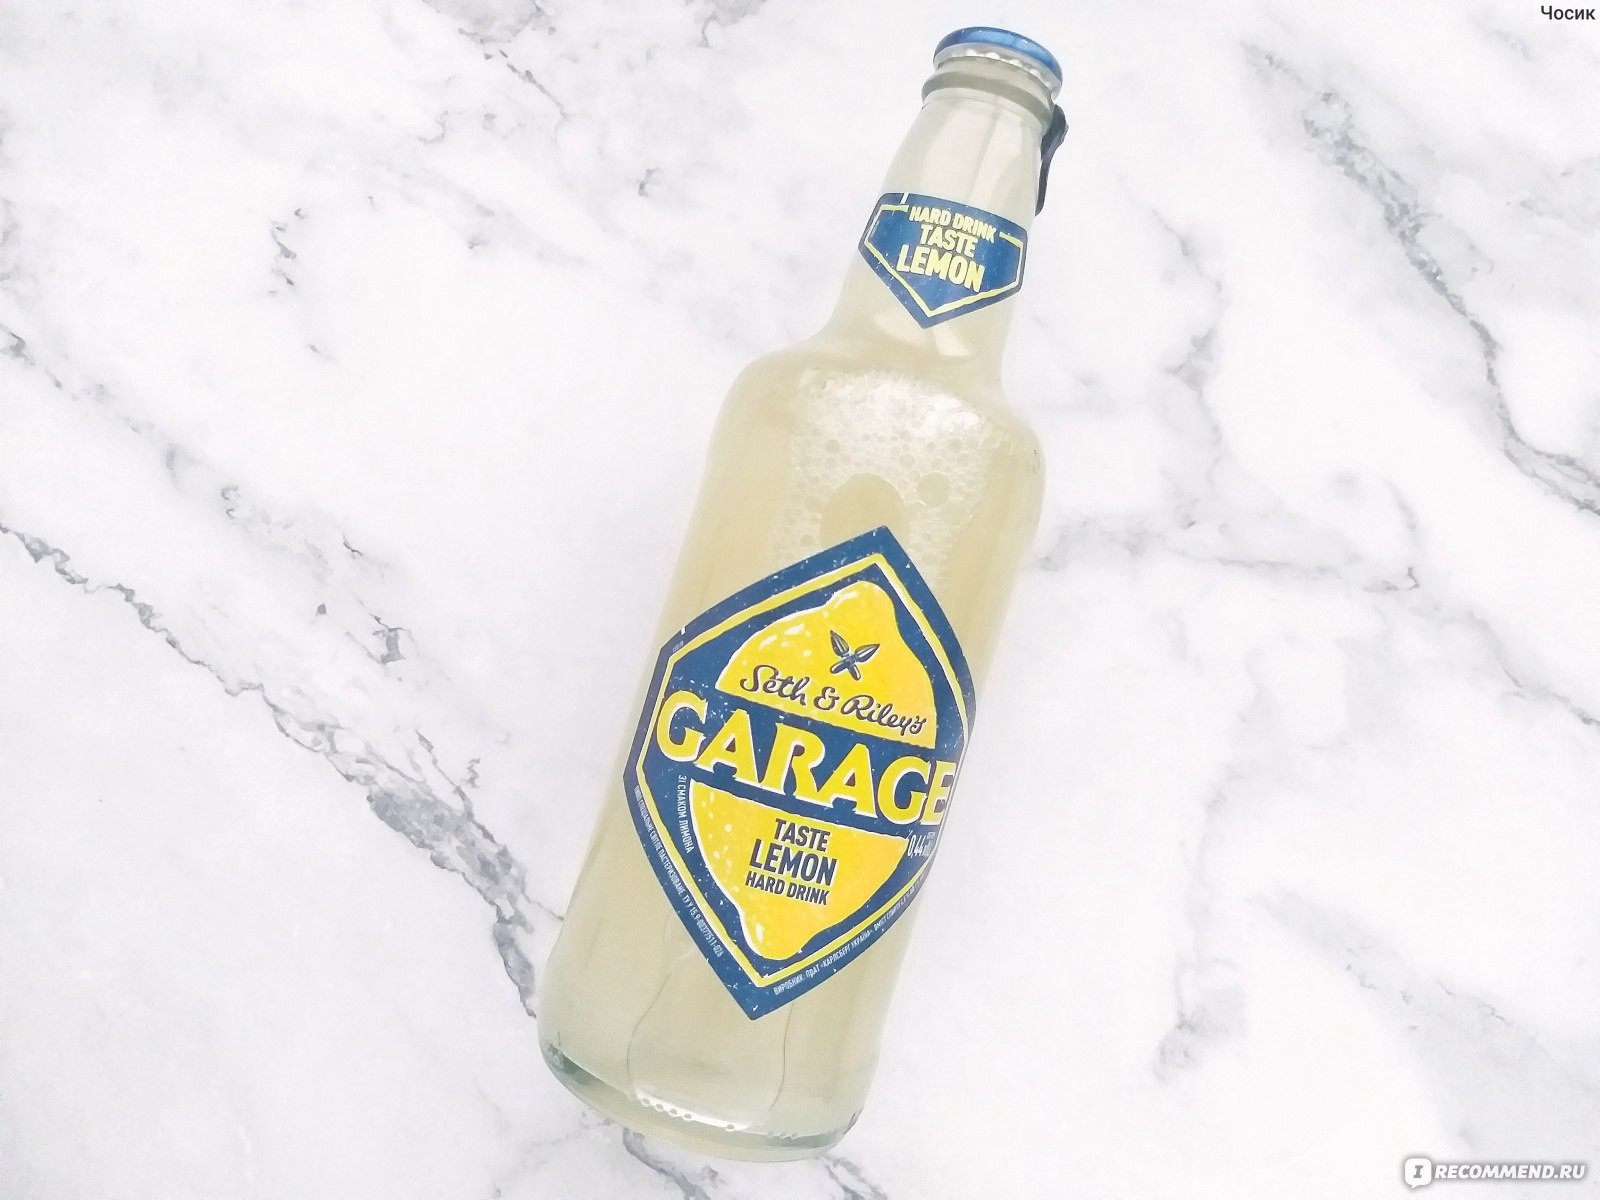 Упаковка S&R's Garage Hard Lemon